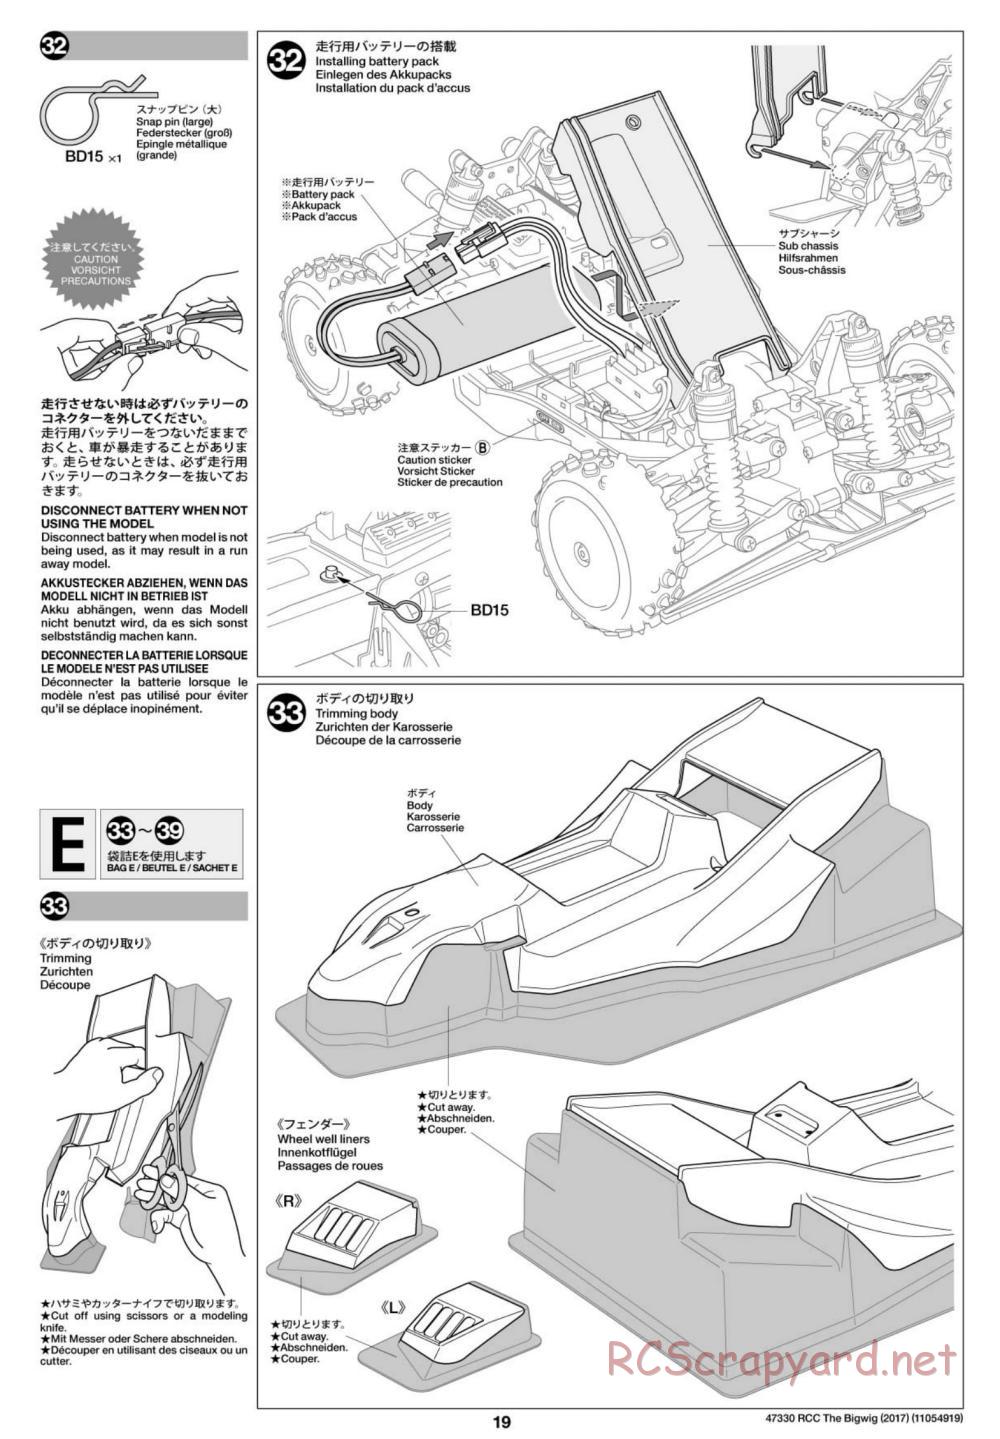 Tamiya - The Bigwig 2017 Chassis - Manual - Page 19